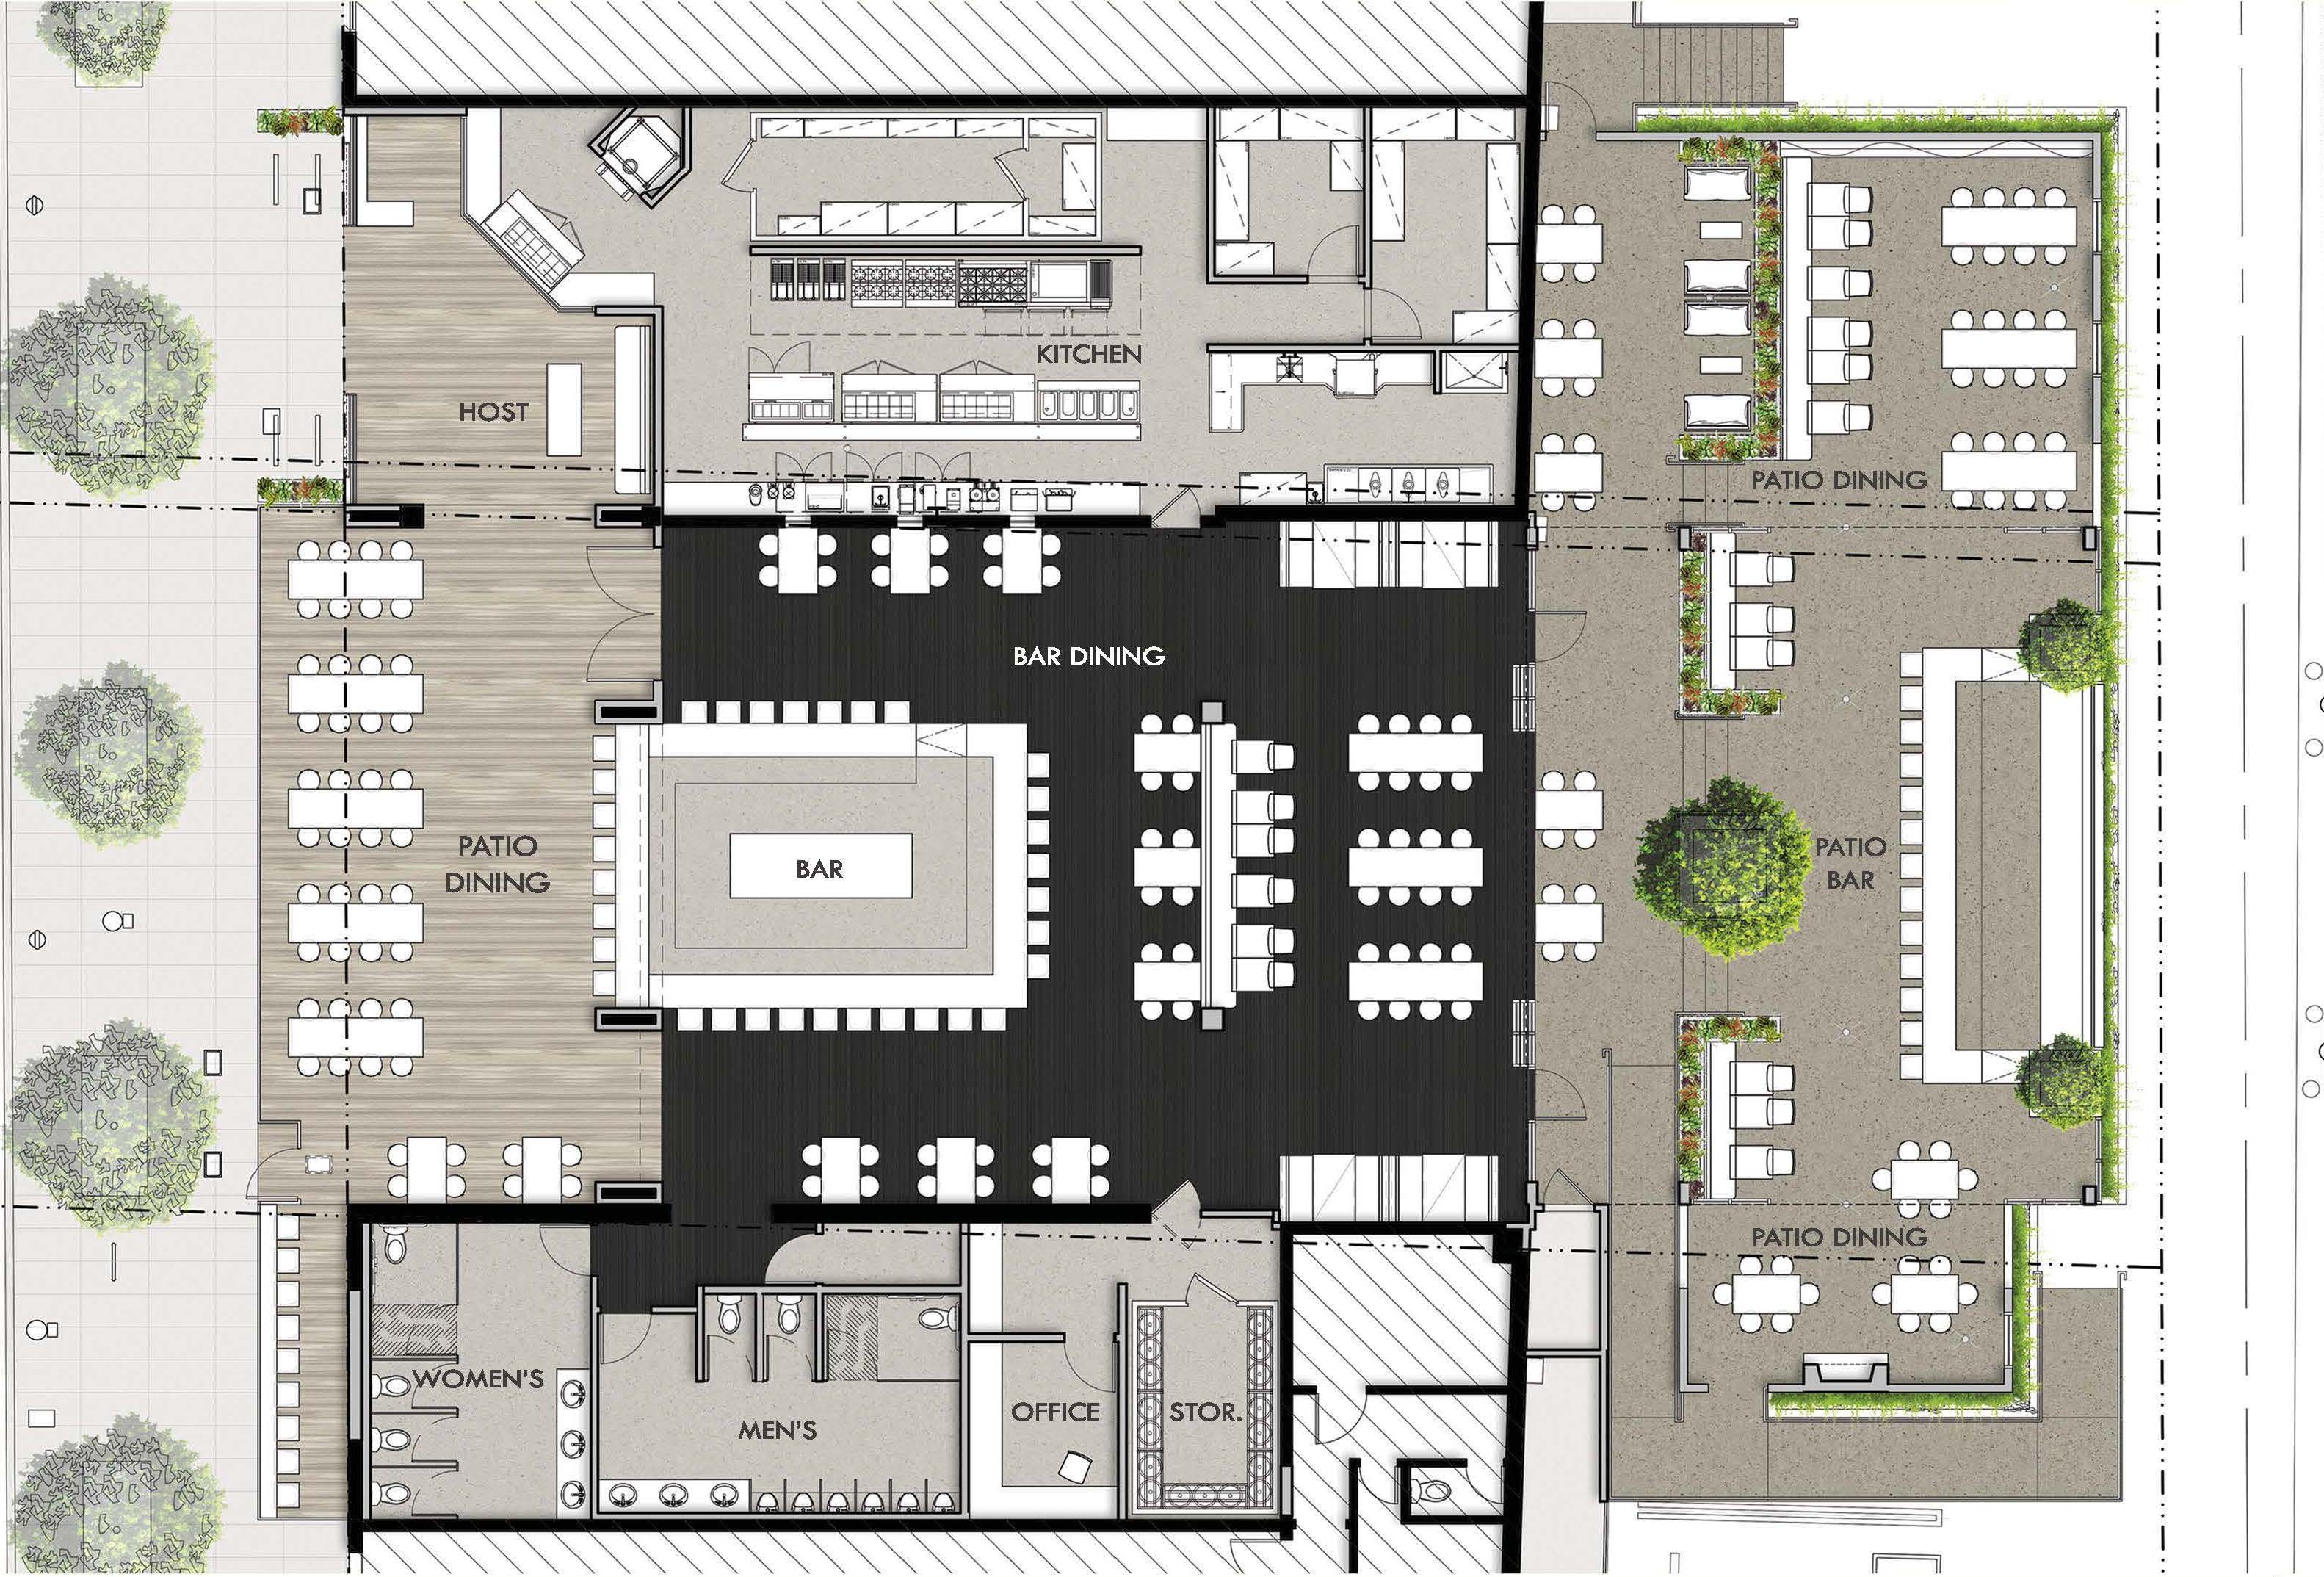 Cooleys floor plan, with Santa Monica Boulevard on left